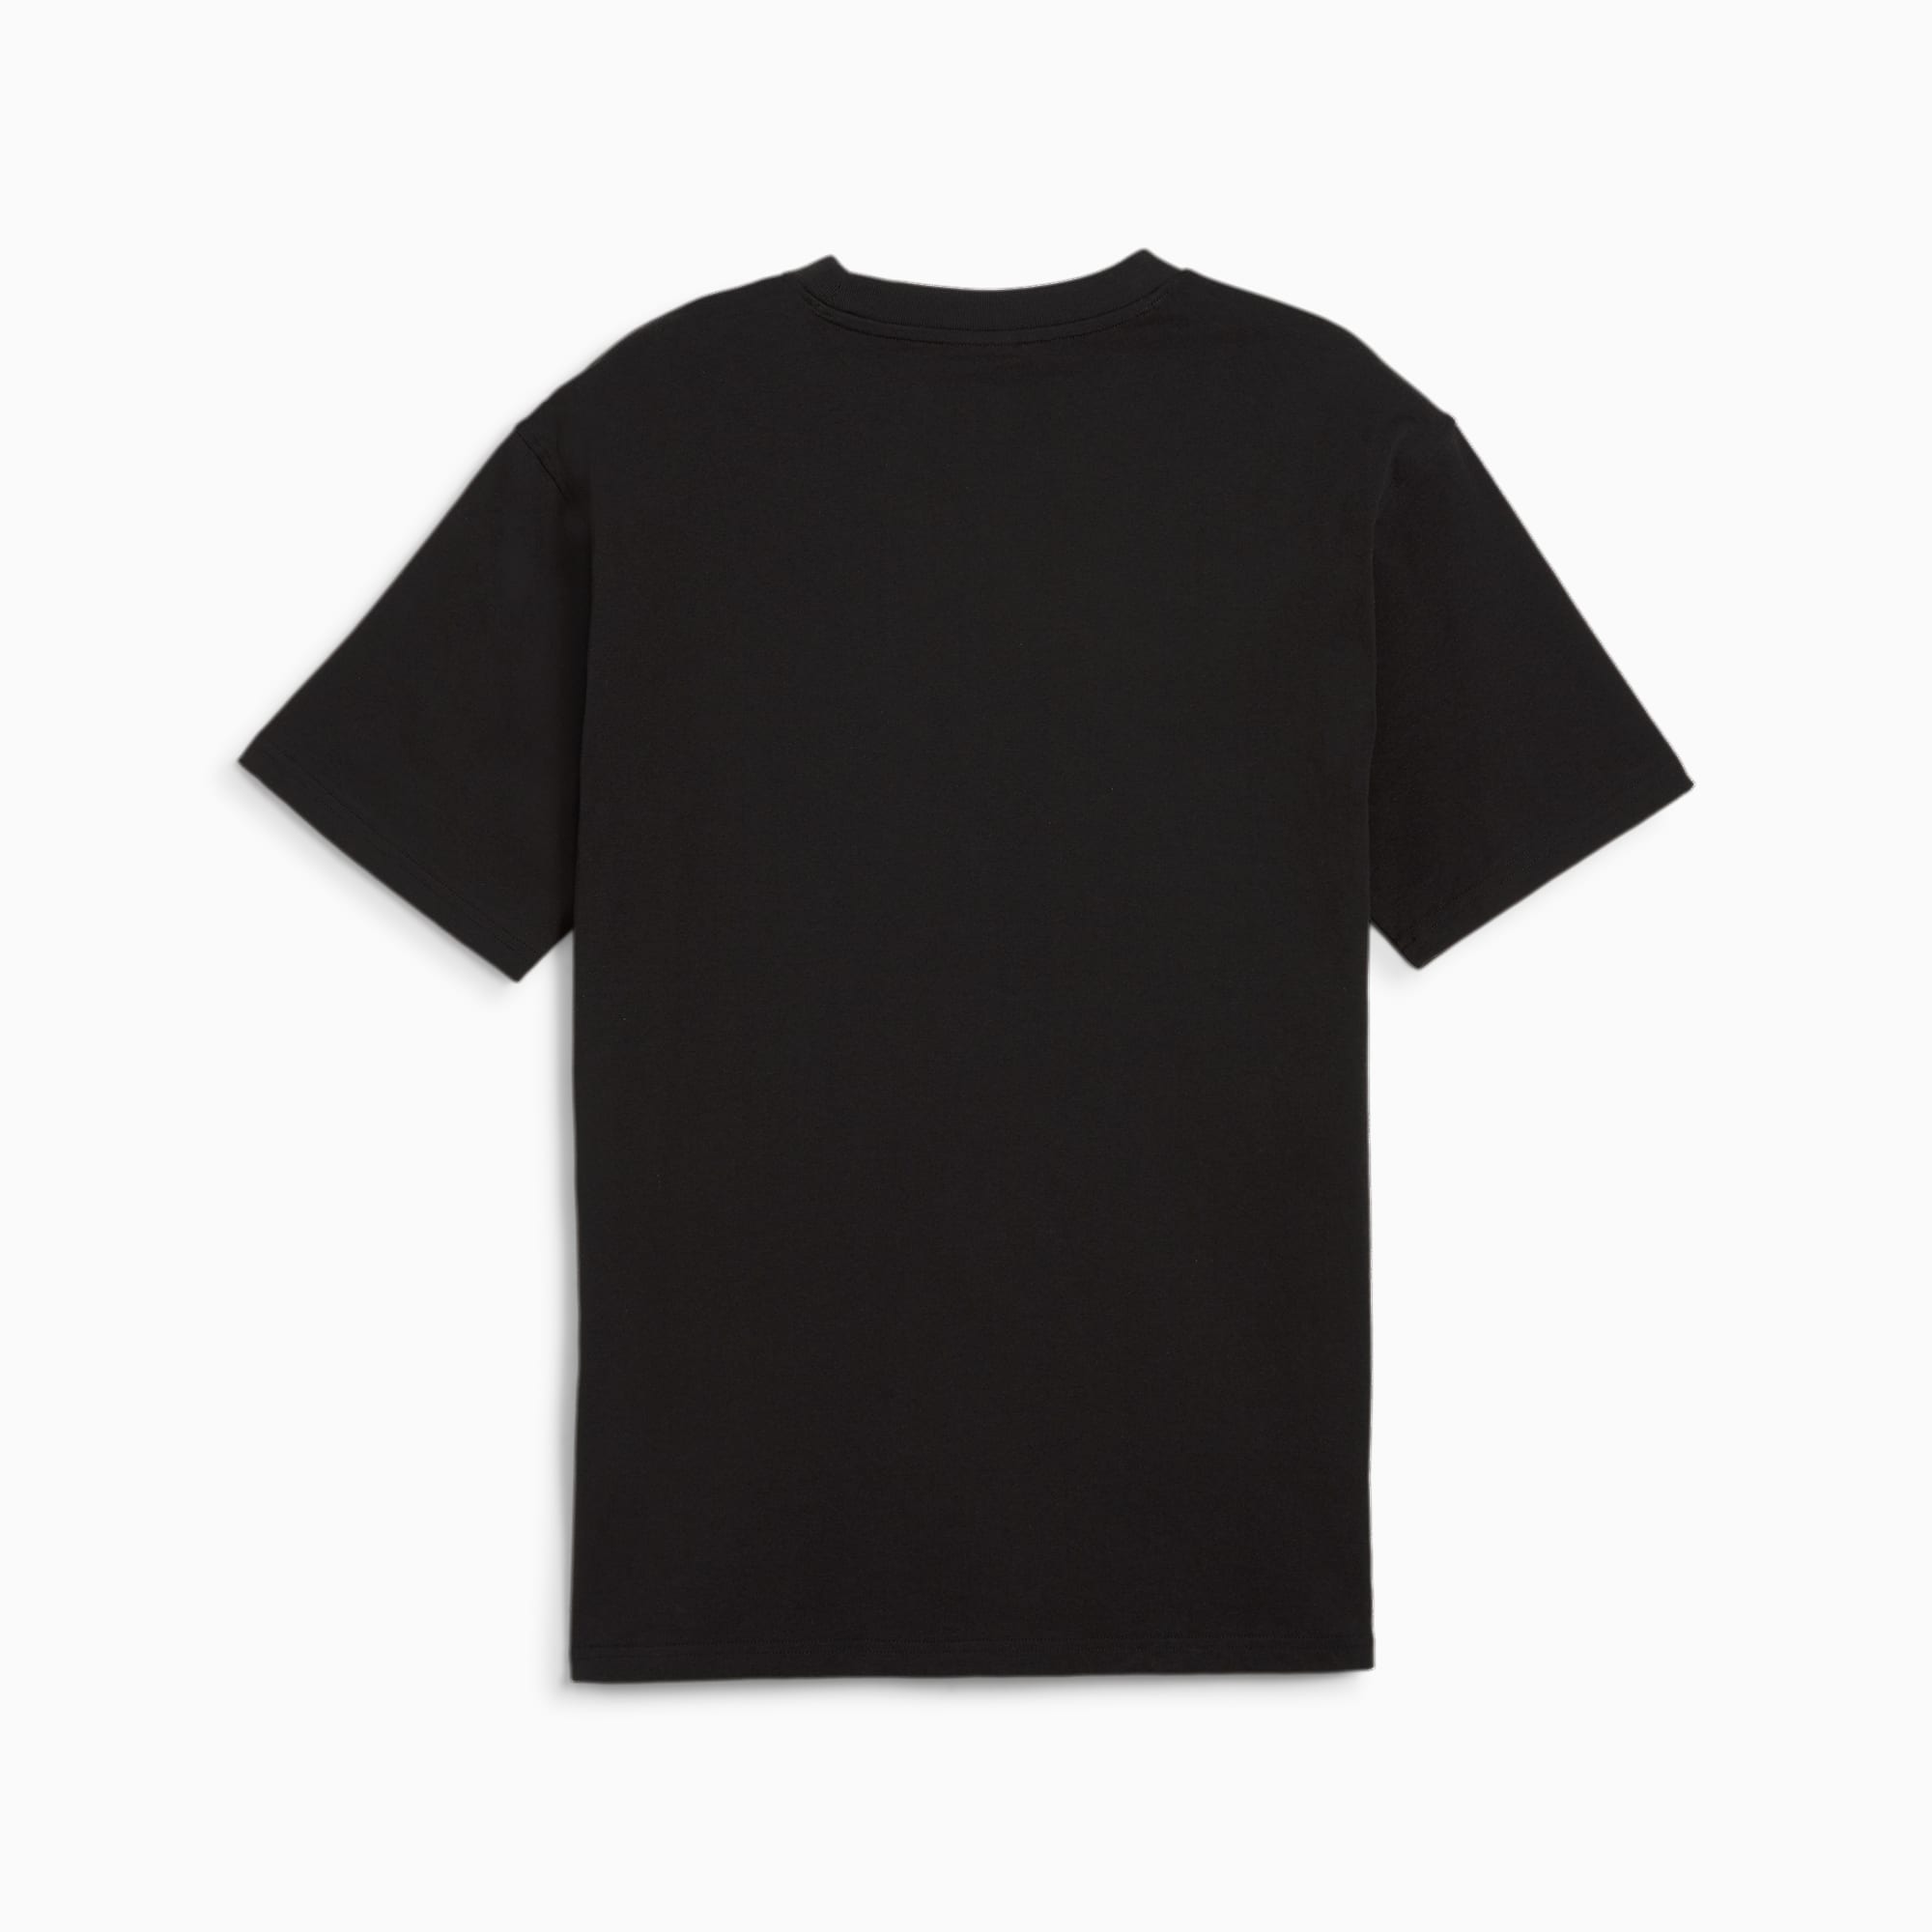 PUMA Jaws Emb Core Men's T-Shirt, Black, Size XS, Clothing